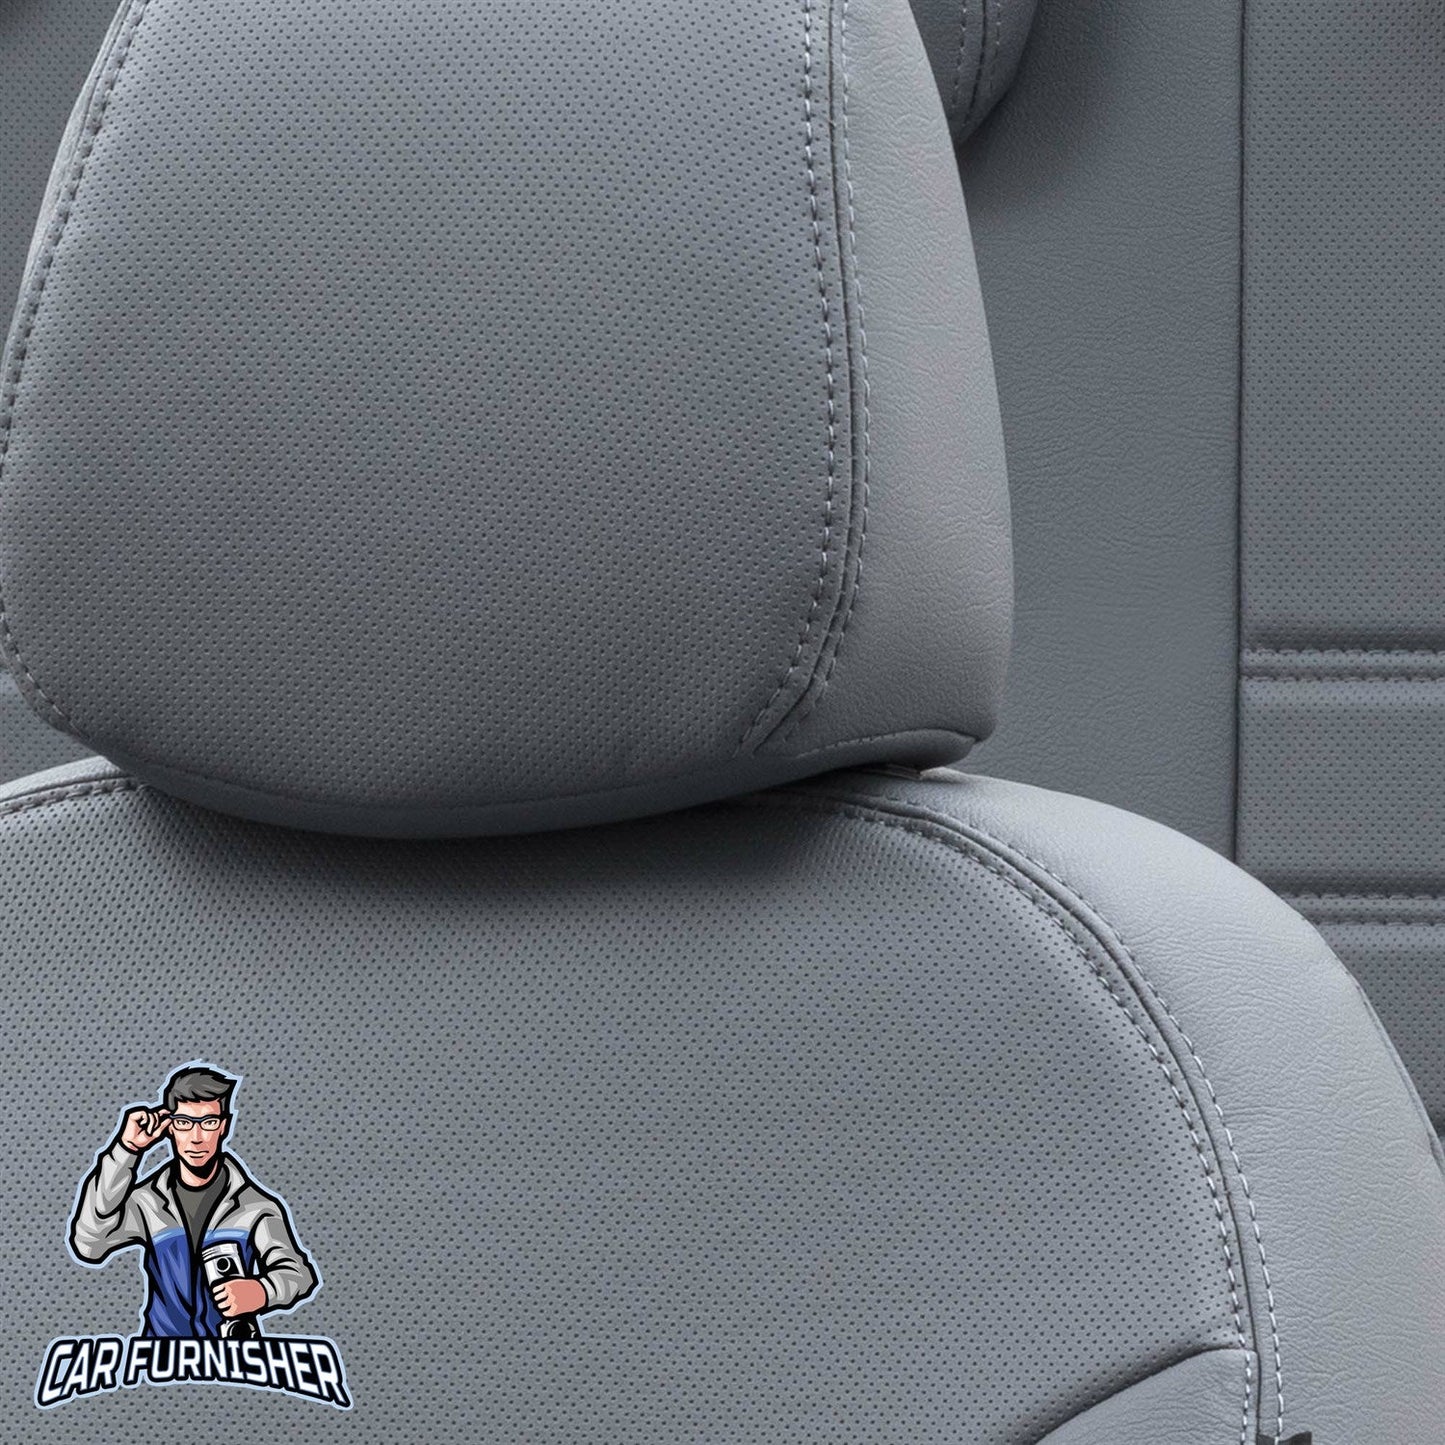 Kia Opirus Seat Covers Istanbul Leather Design Smoked Leather